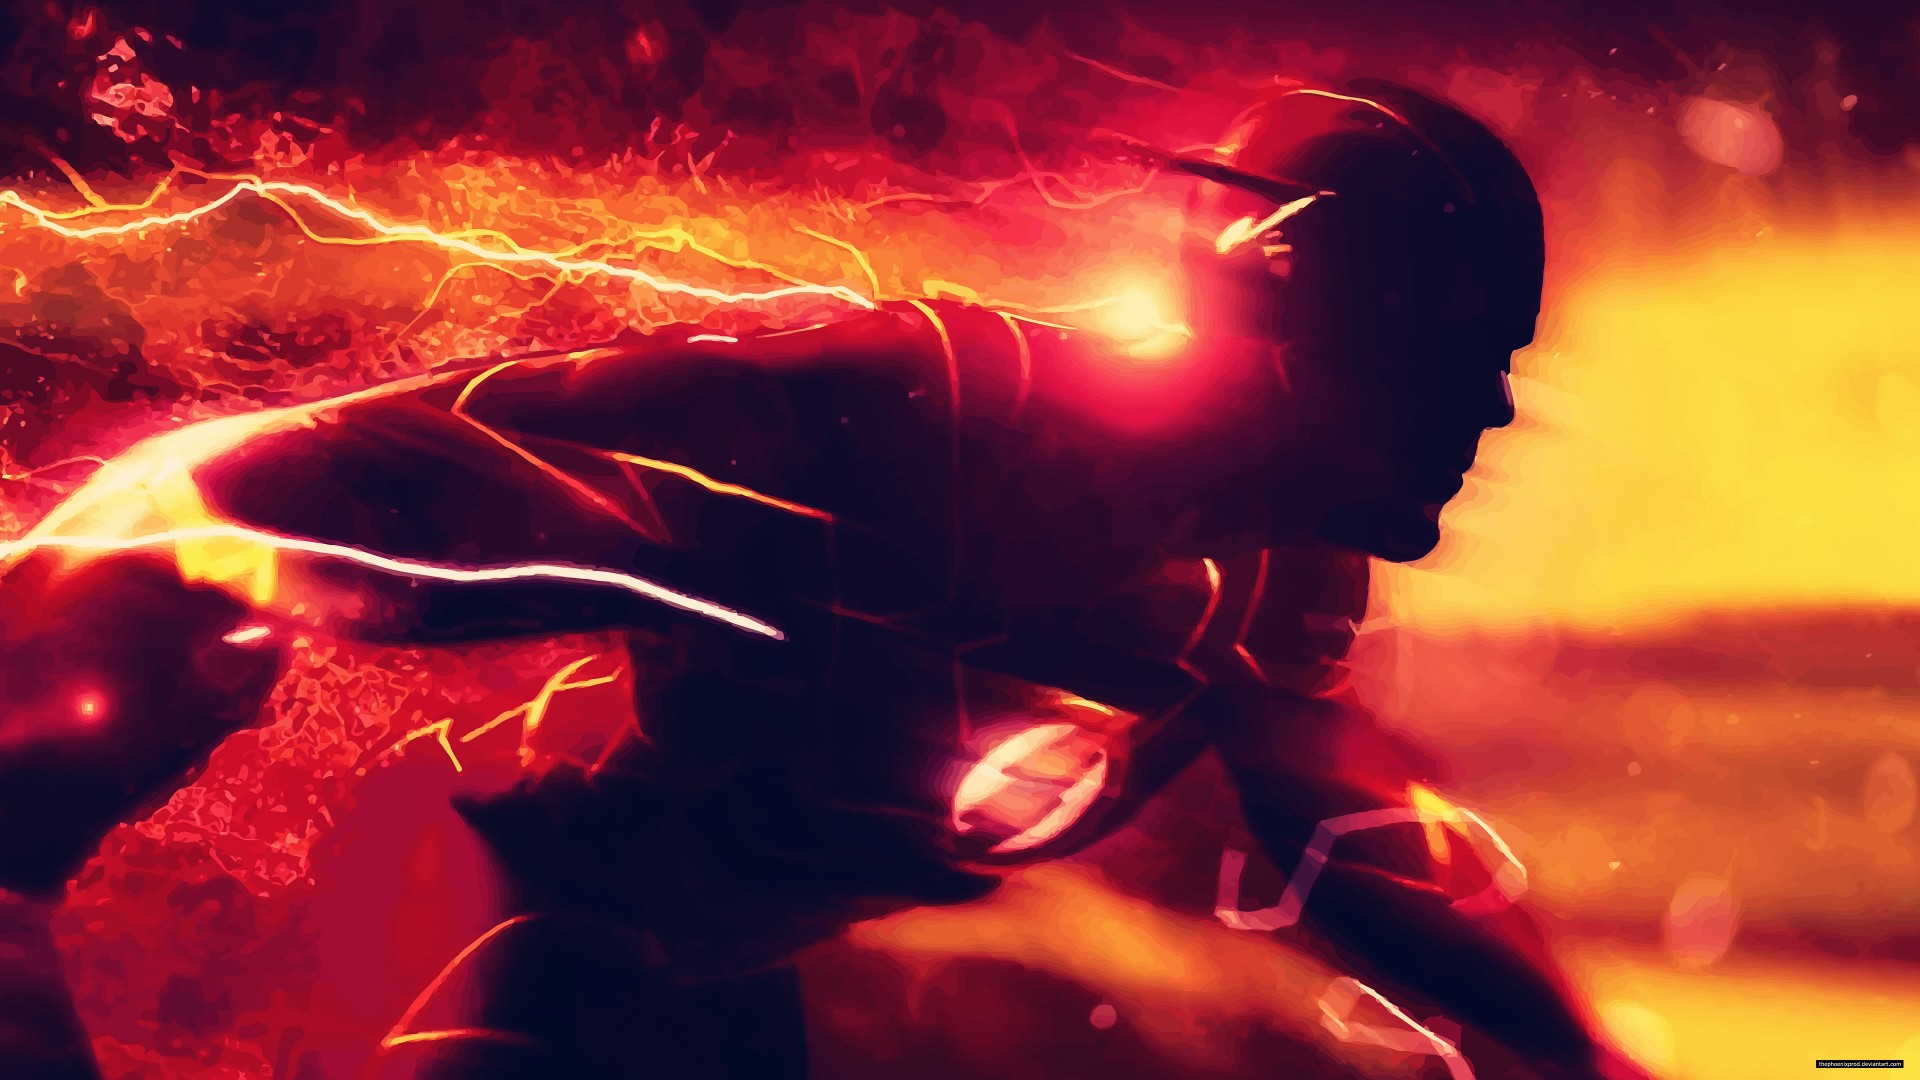 The Flash Barry Allen DC Comics Superhero Watermarked Lightning Running Bodysuit 1920x1080